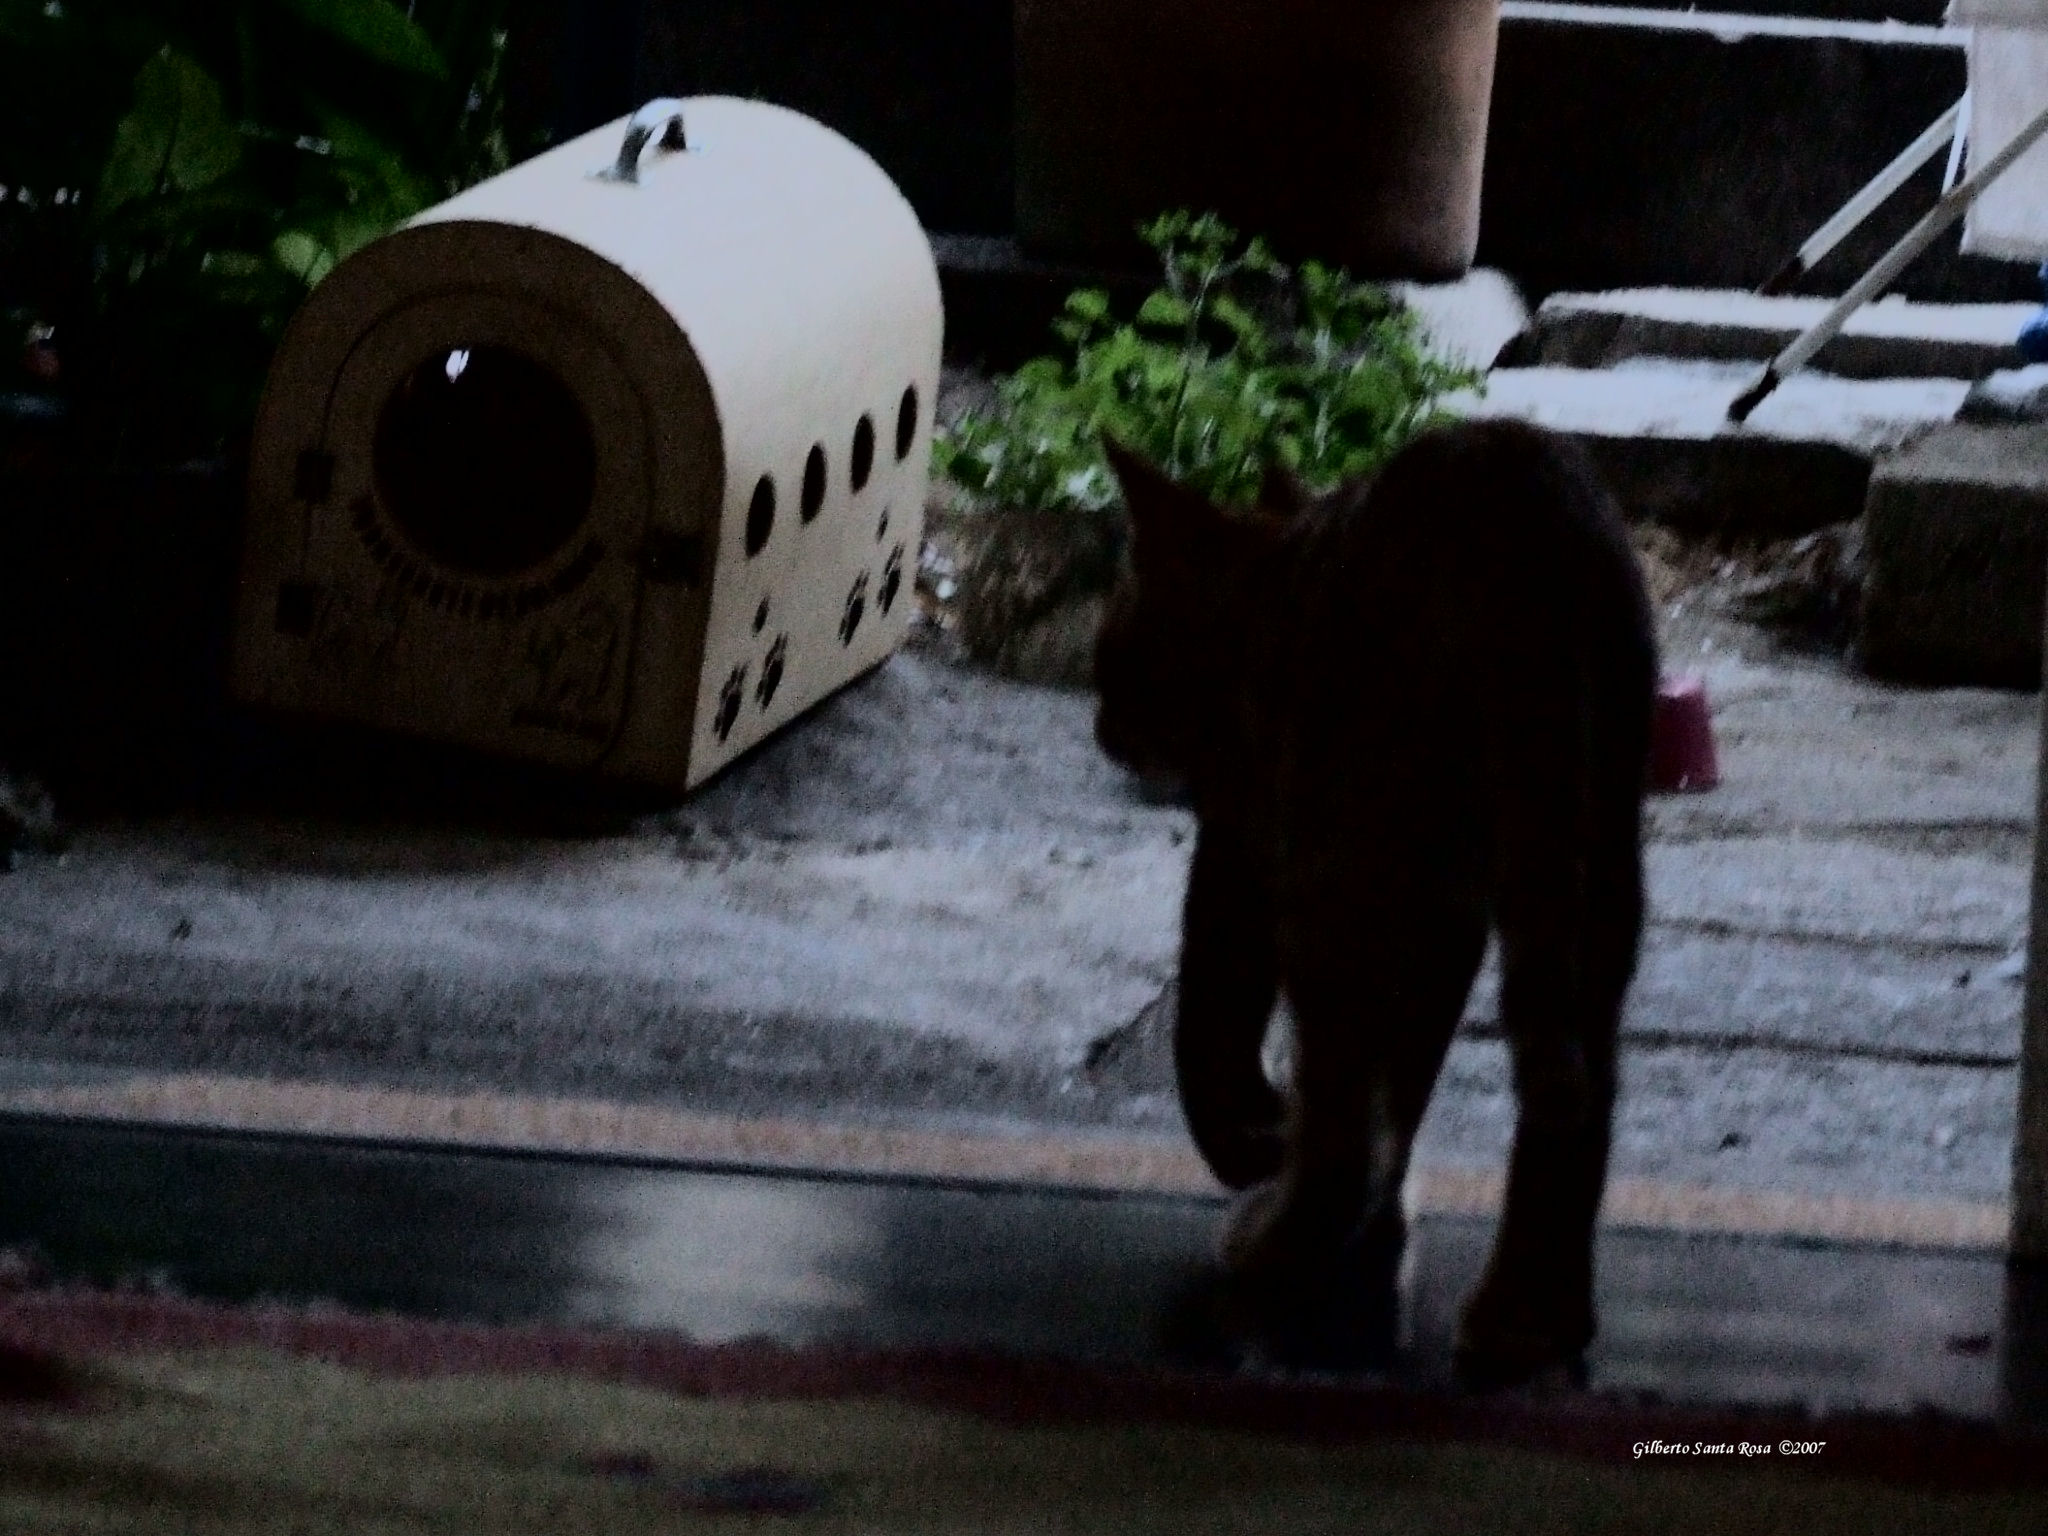 a large black cat walks by a pet house